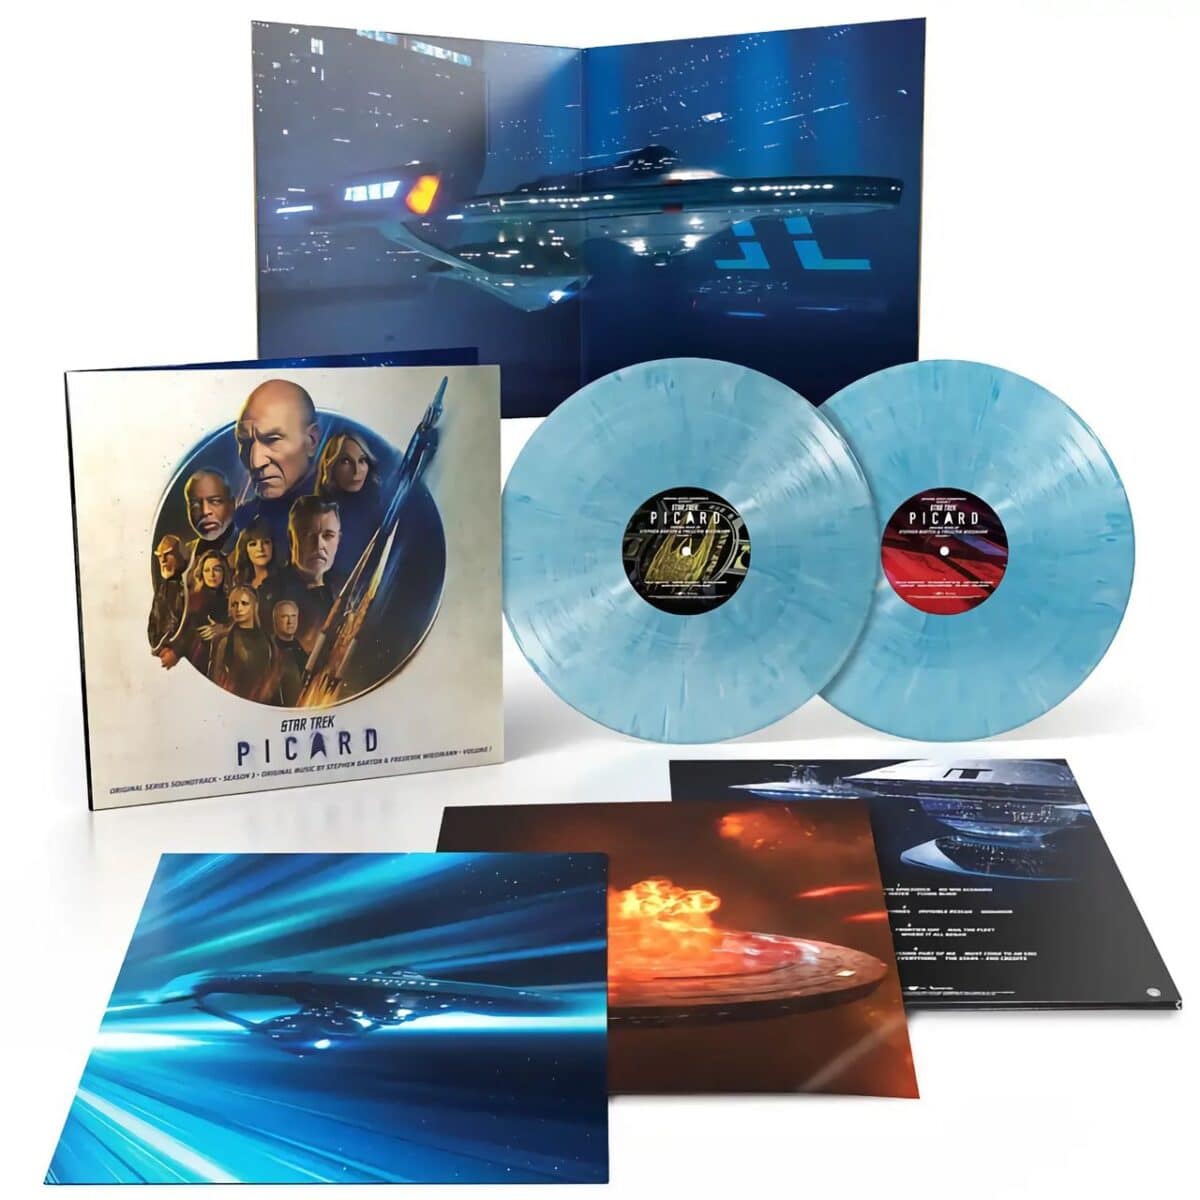 Star Trek Picard (Original Series Soundtrack - Season 3) vinyl